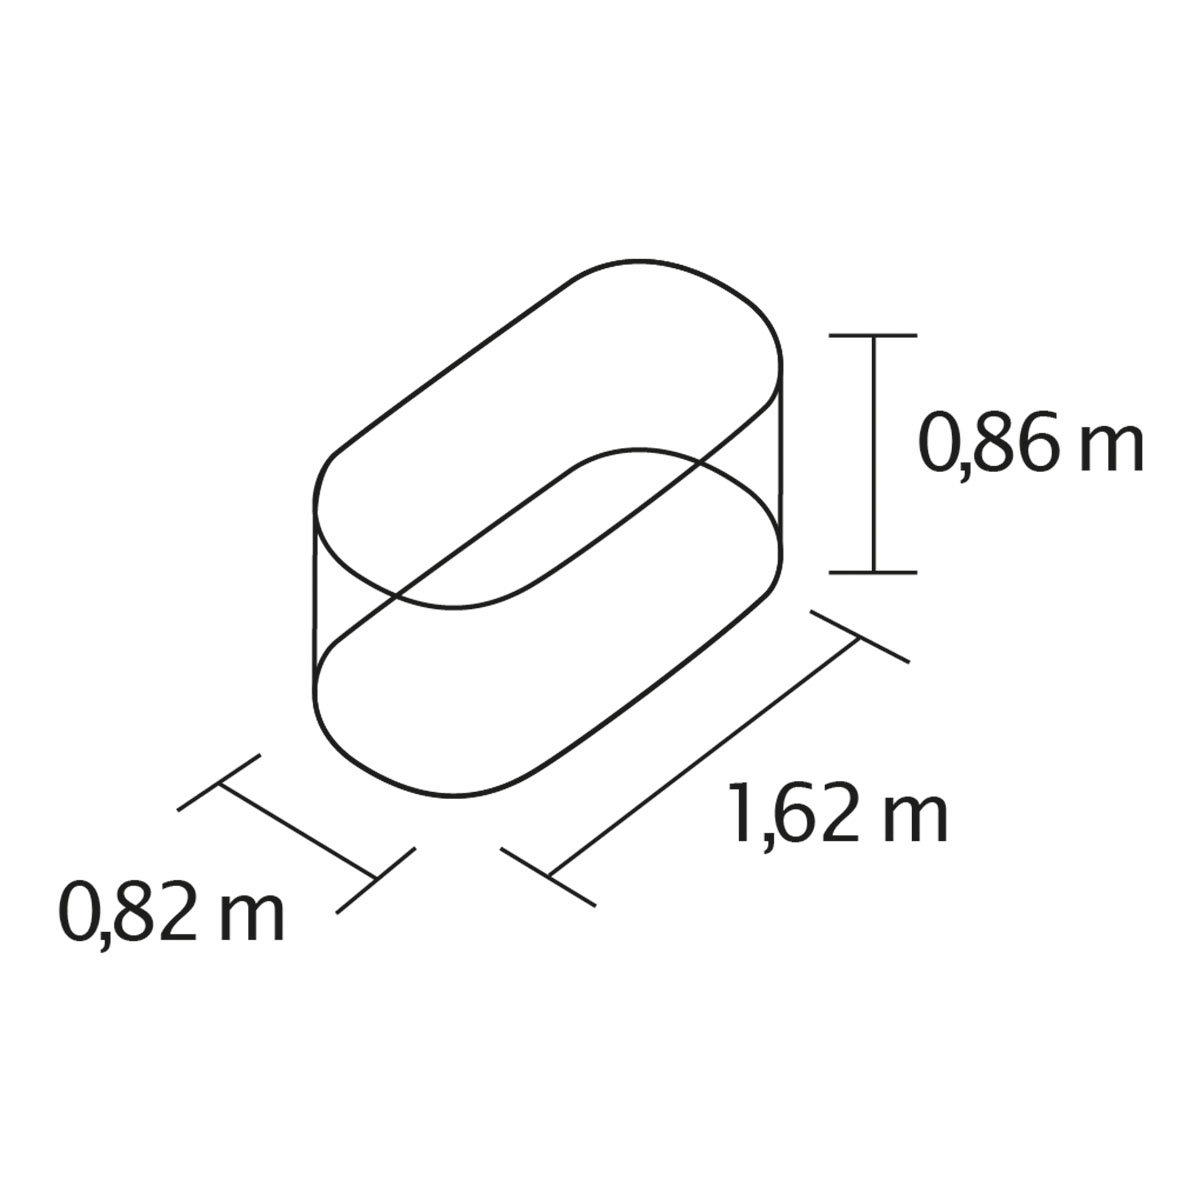 Hochbeet Terra 858, granit 162x82x86 cm
| #2